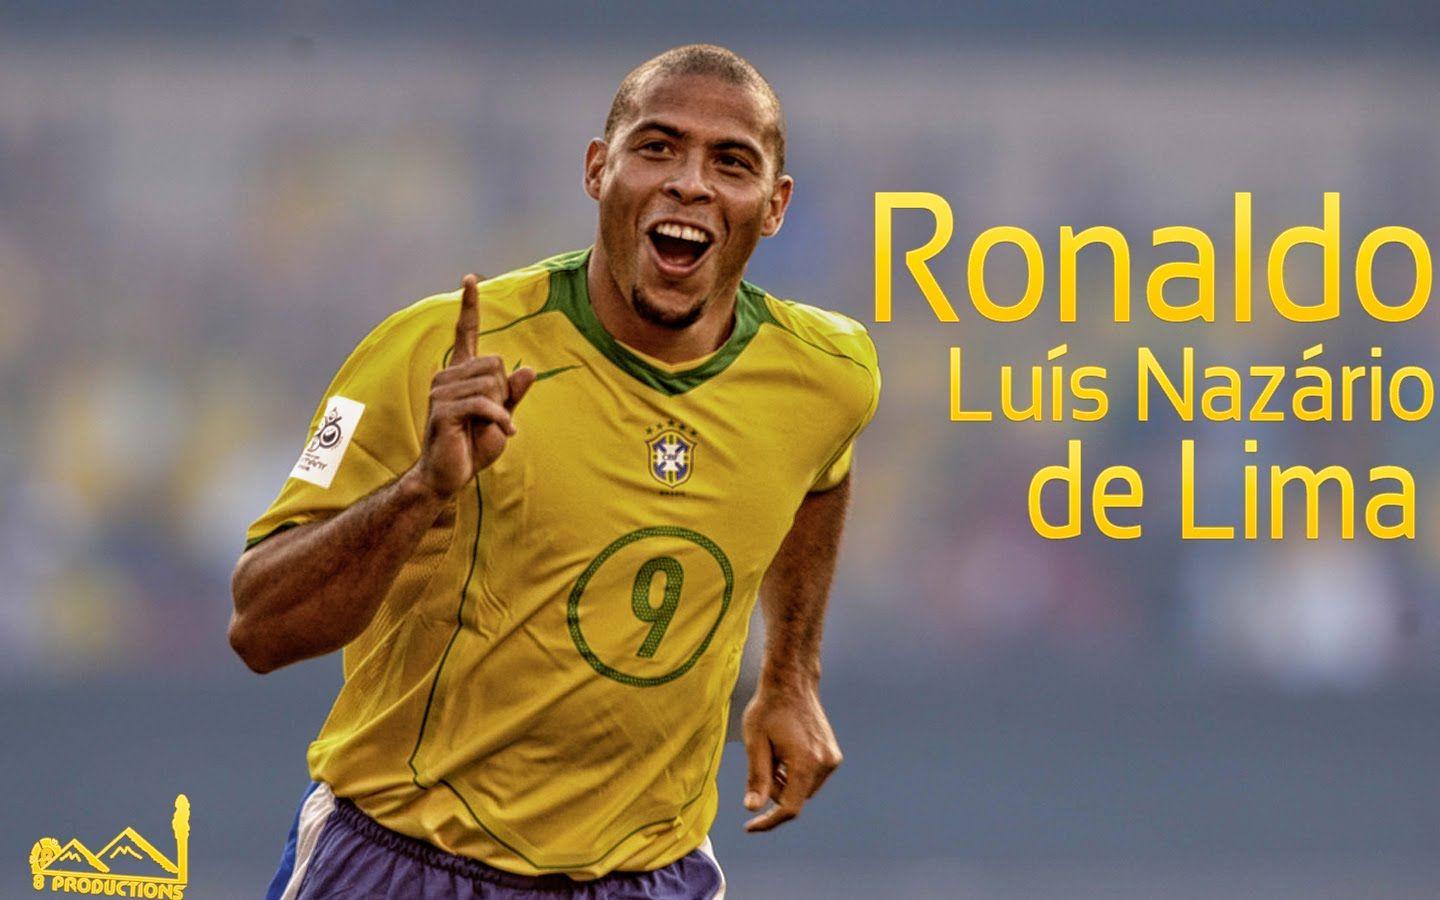 Luiz nazario Da Lima Ronaldo FENOMENO